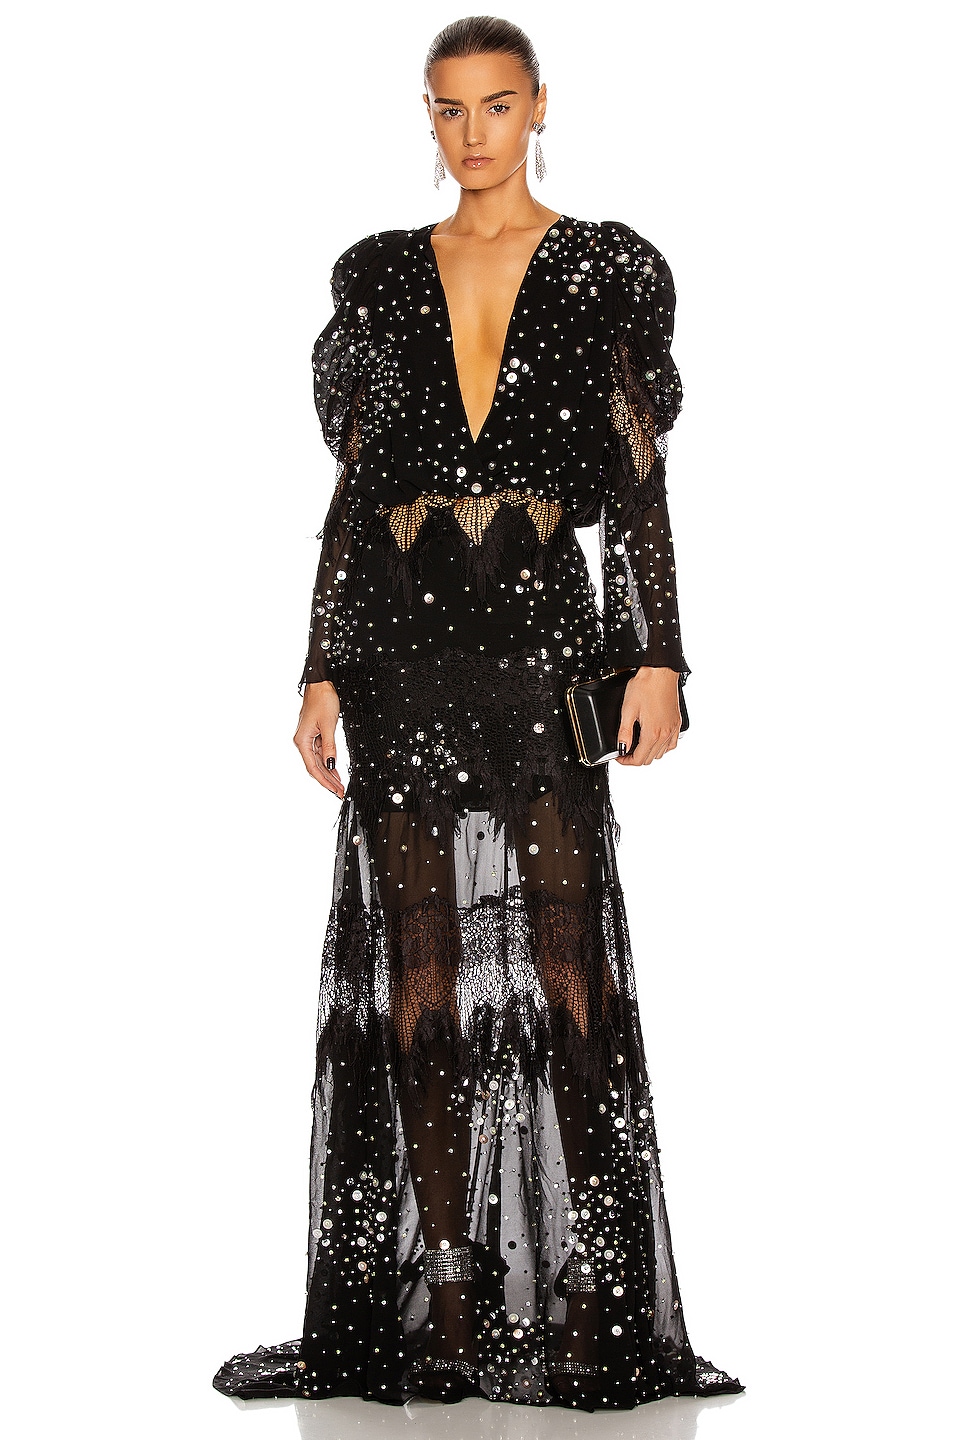 Raisa Vanessa Embellished Maxi Dress in Black | FWRD